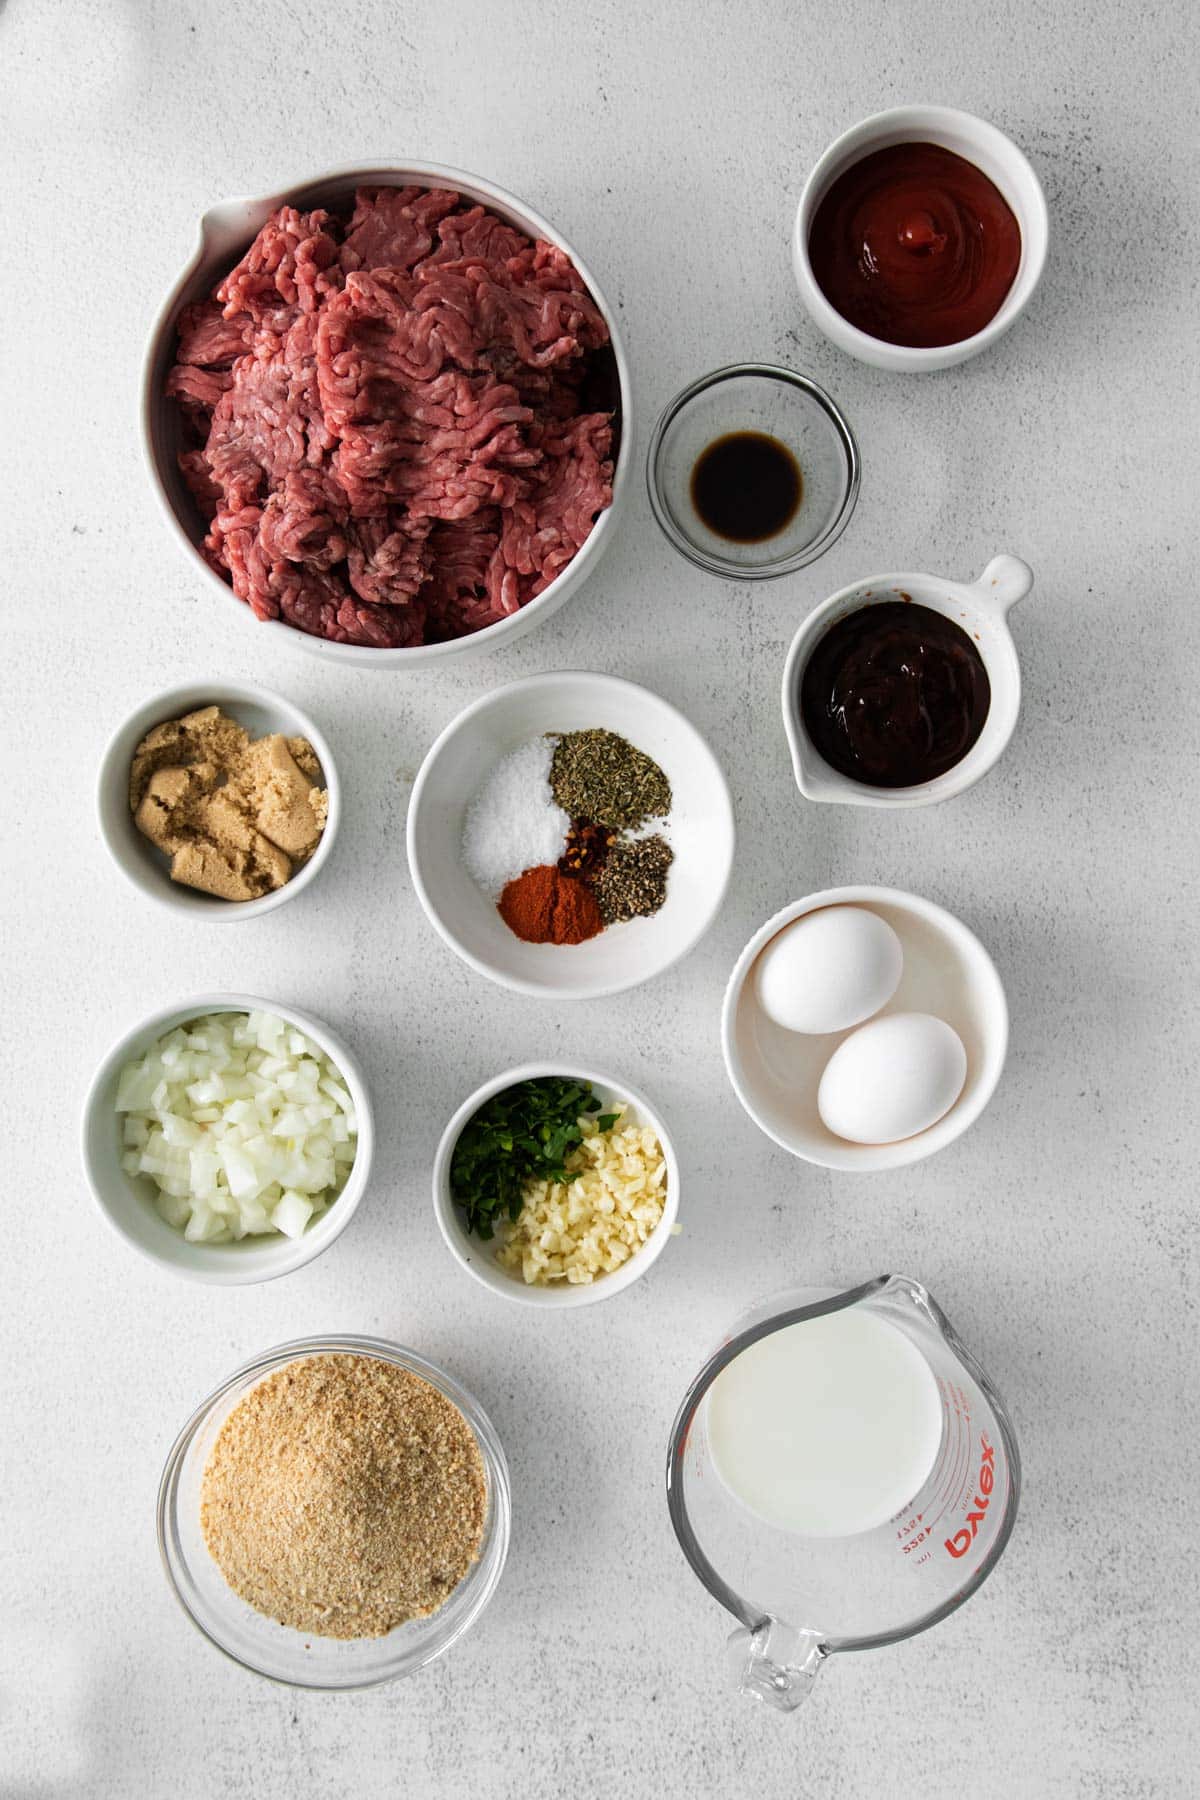 ingredients for homemade meatloaf.